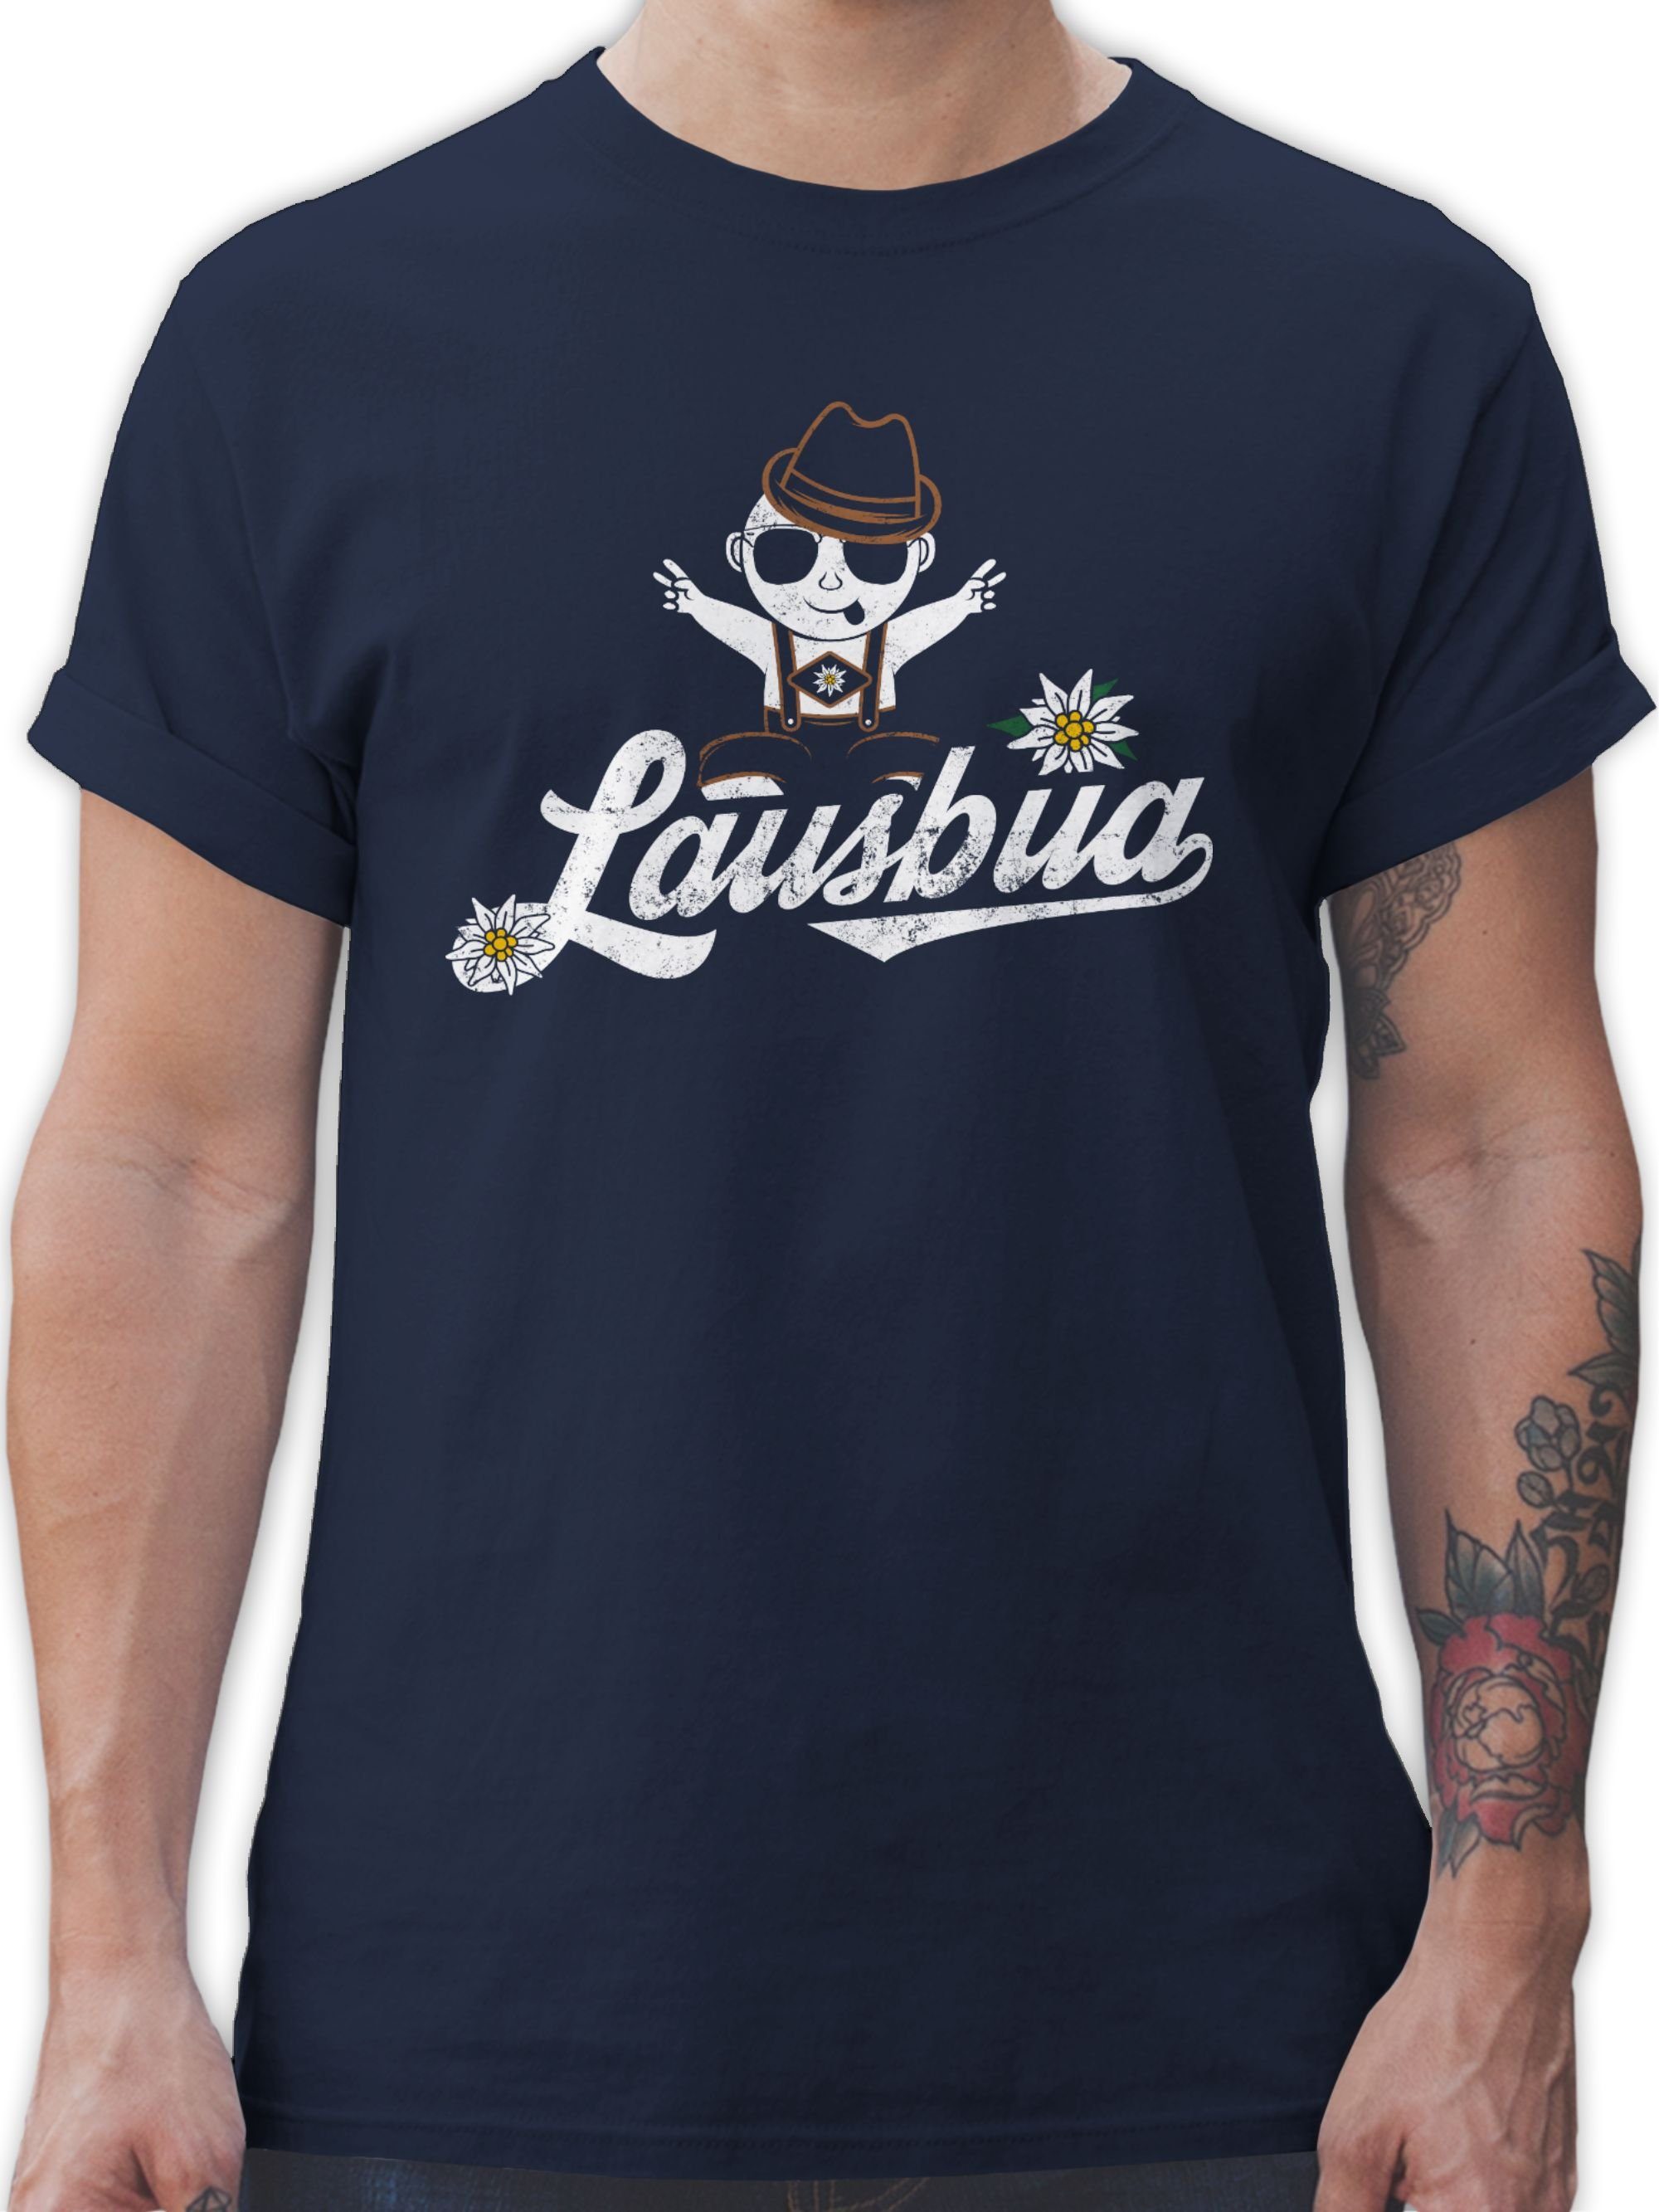 Shirtracer T-Shirt Lausbua Baby I Wiesn Lustig Witzig Mode für Oktoberfest Herren 03 Navy Blau